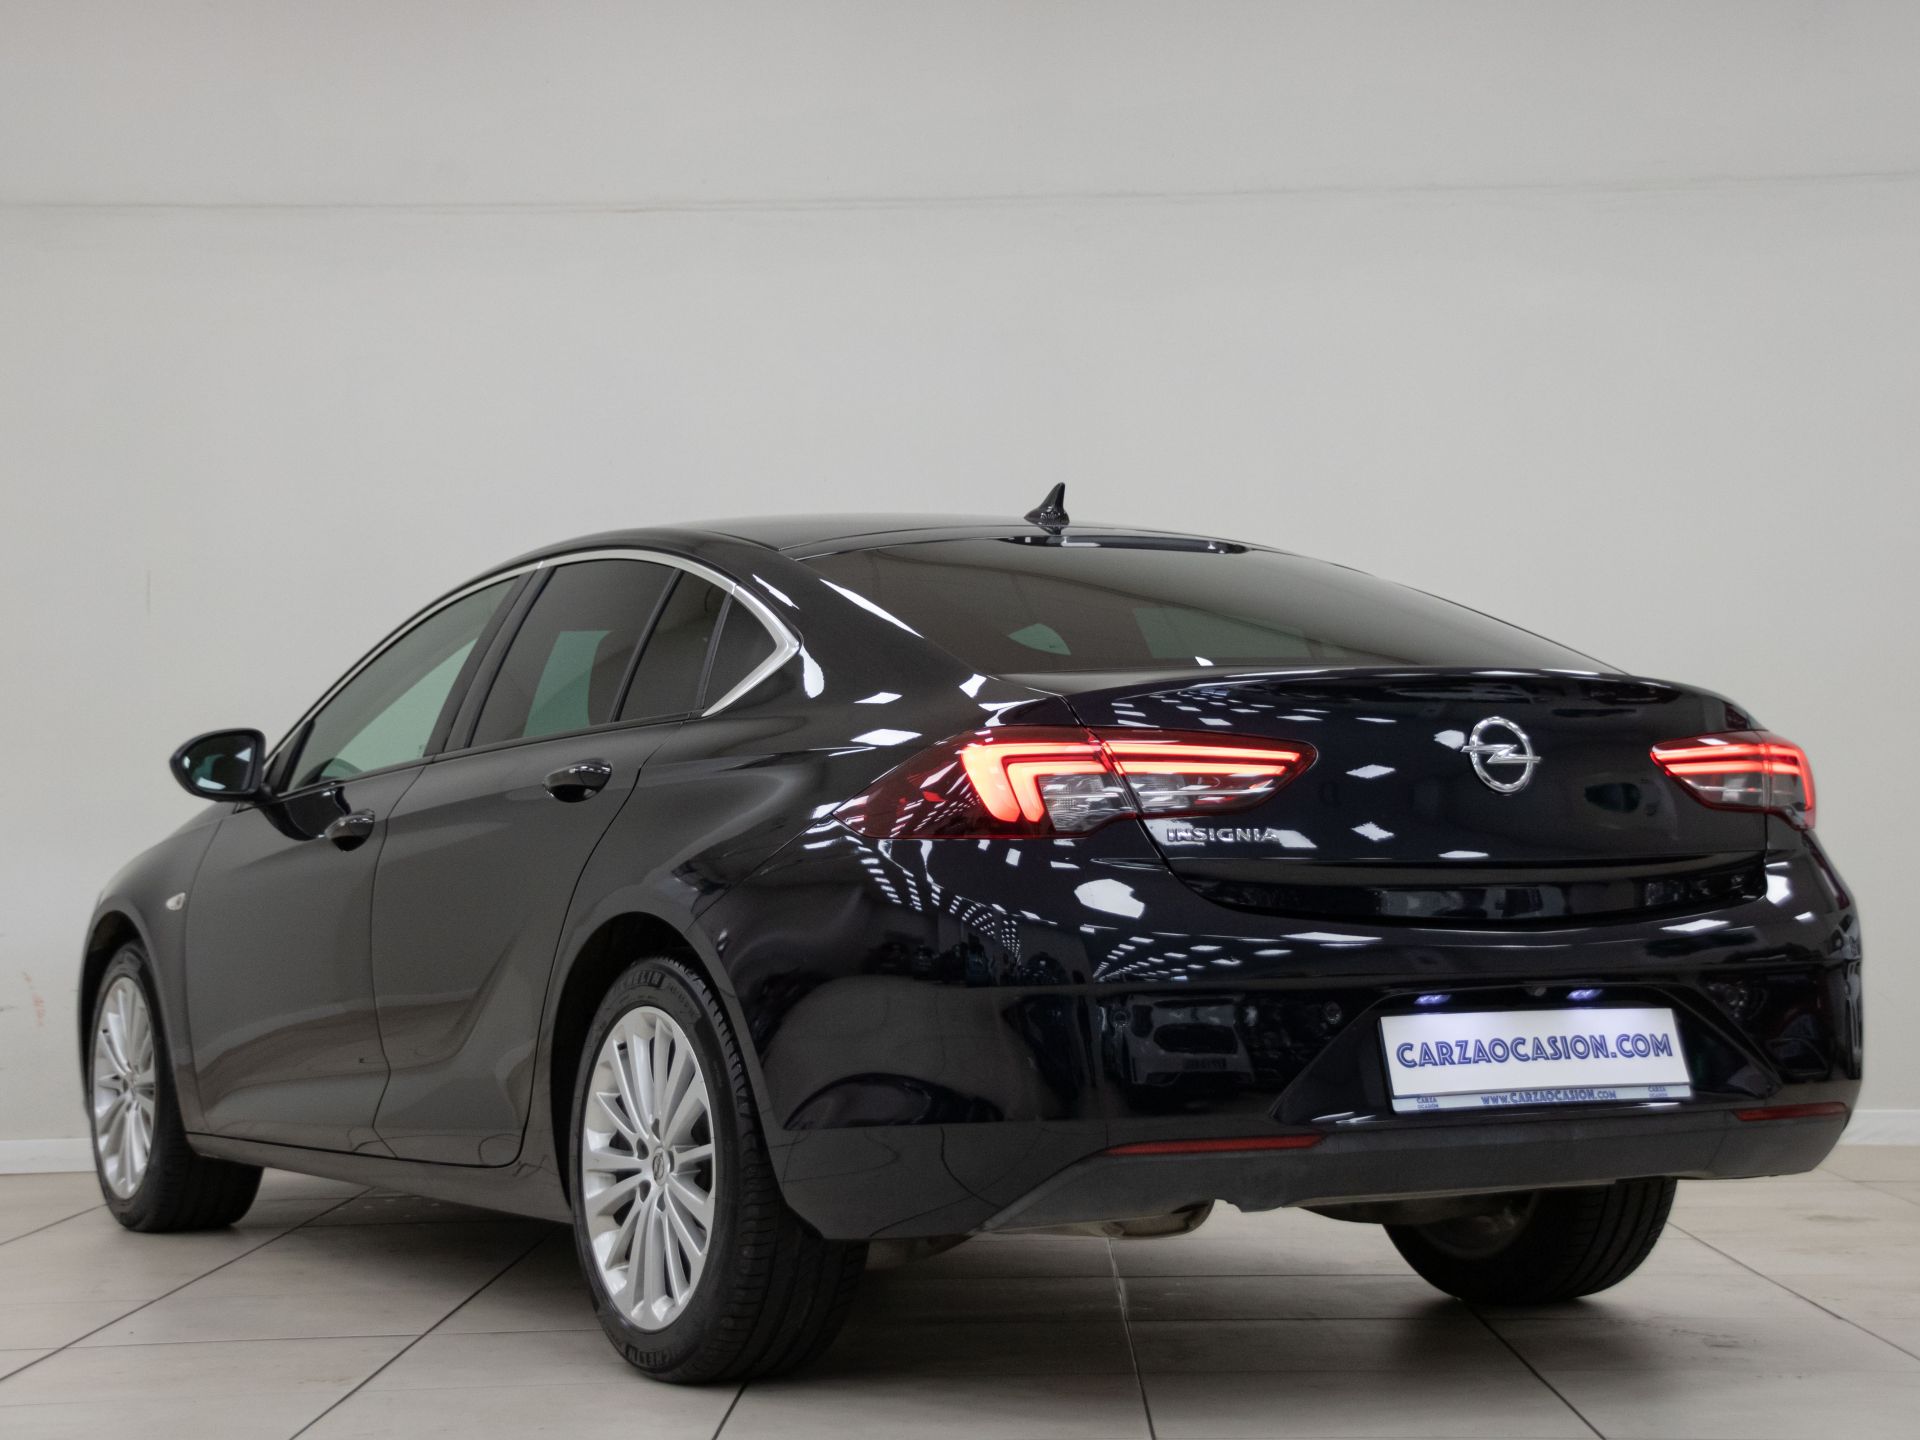 Opel Insignia GS 1.6 CDTi 100kW Turbo D Selective